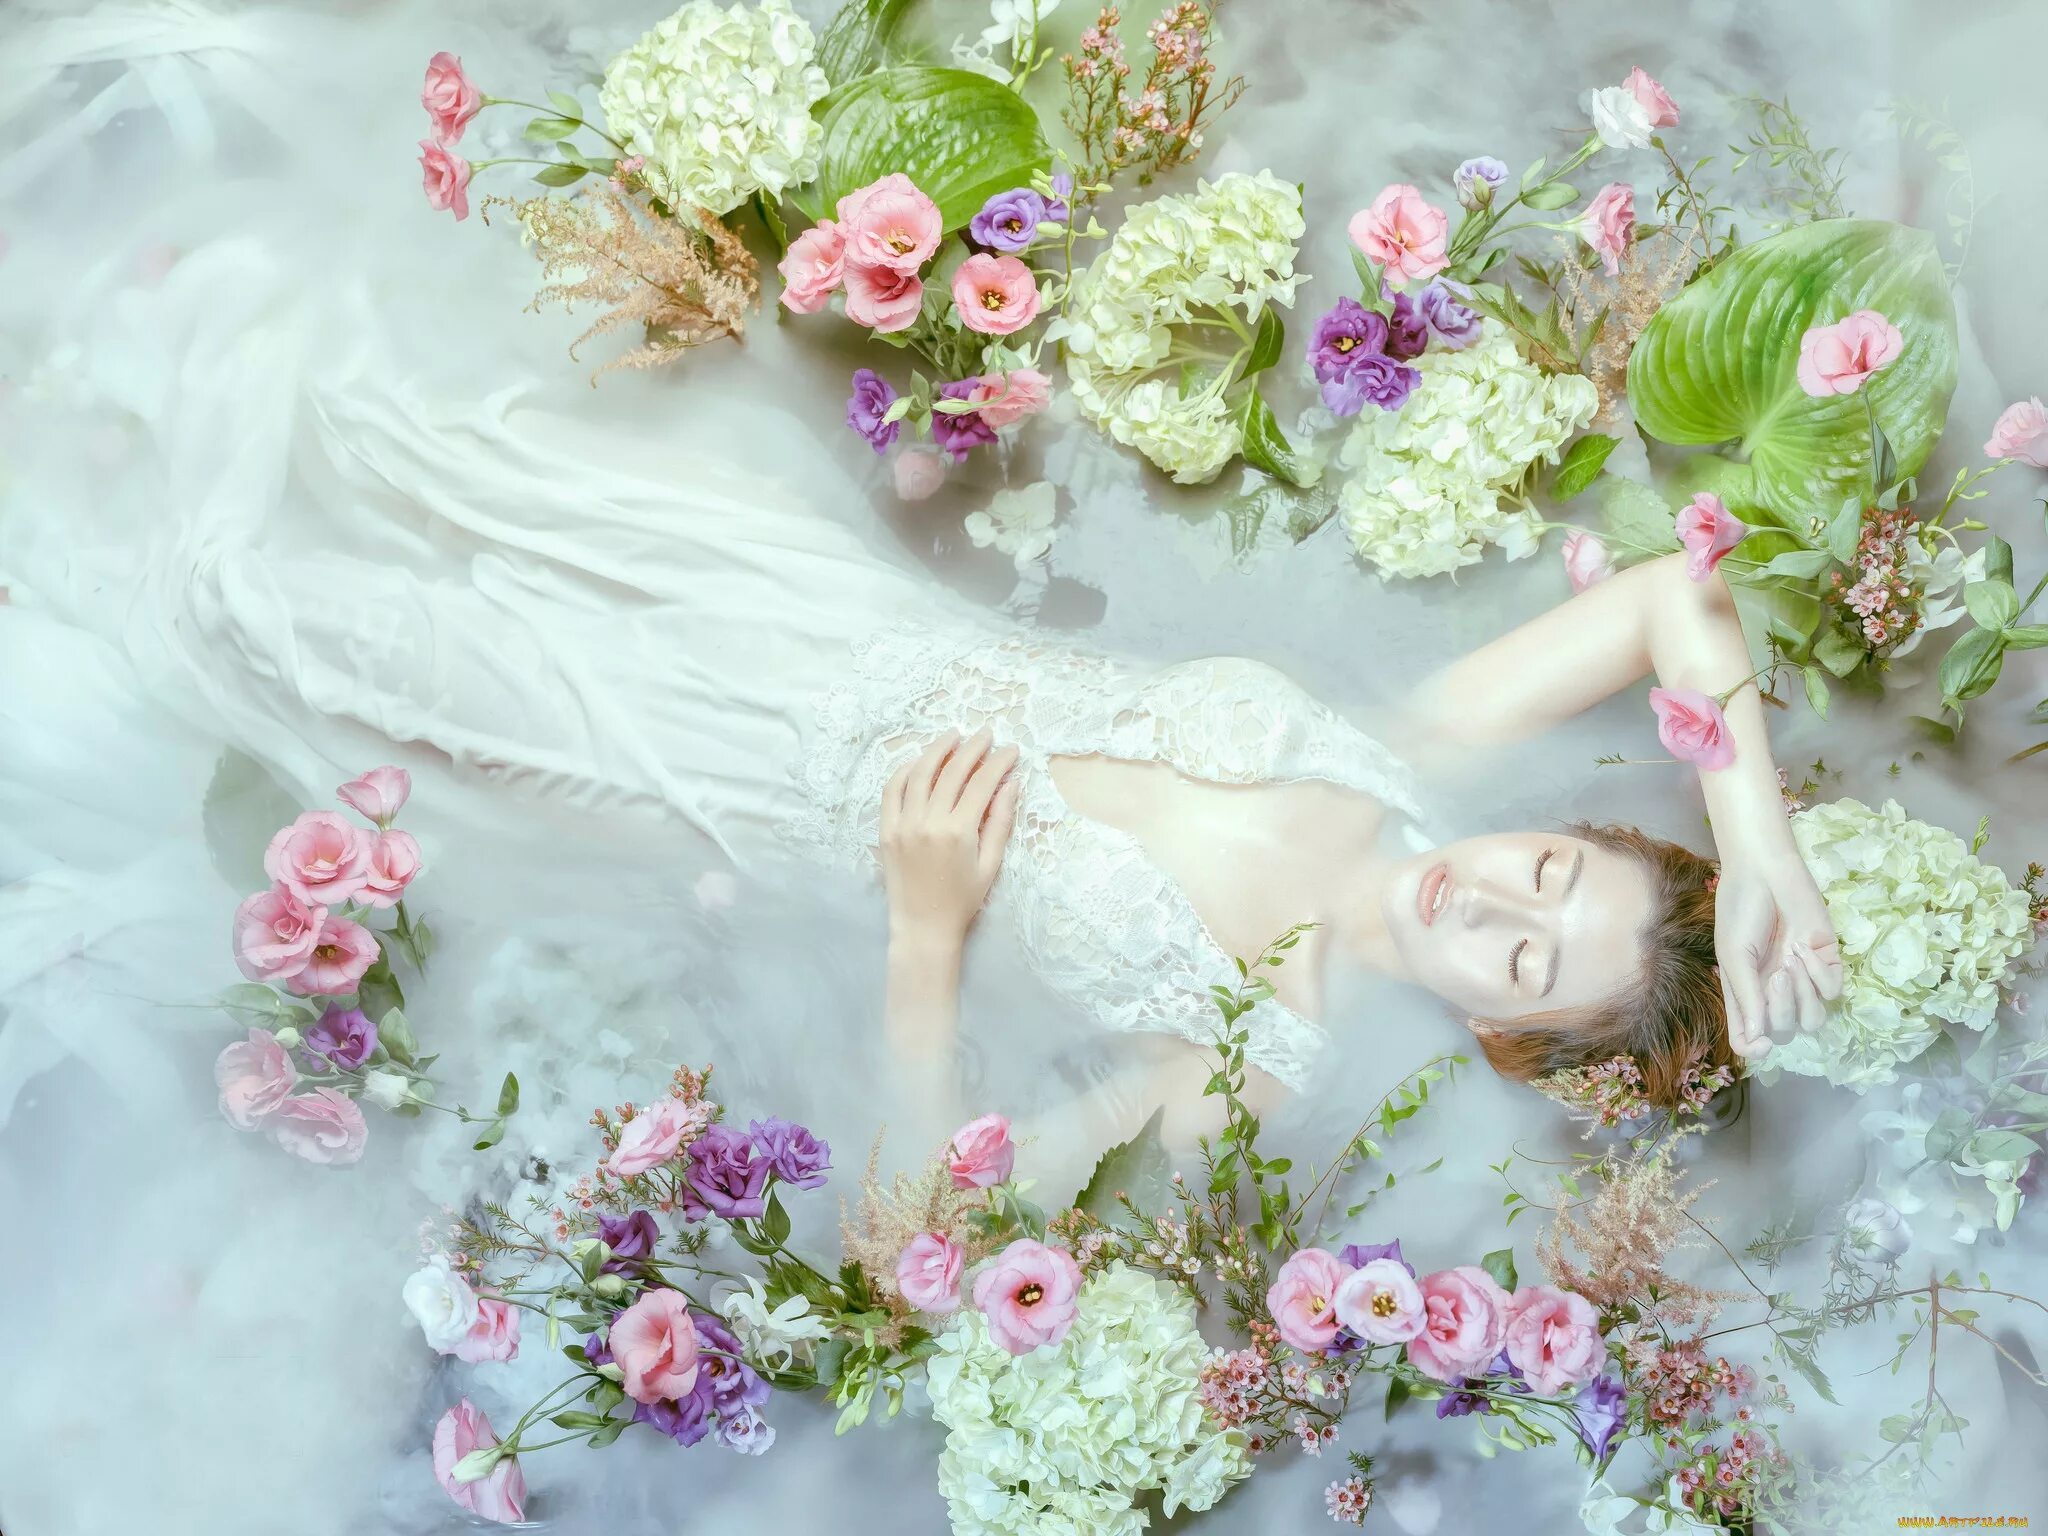 The flowers to water every day. Девушка в воде с цветами. Девушка в цветах в воде. Девушка из цветов. Эстетика вода с цветами.